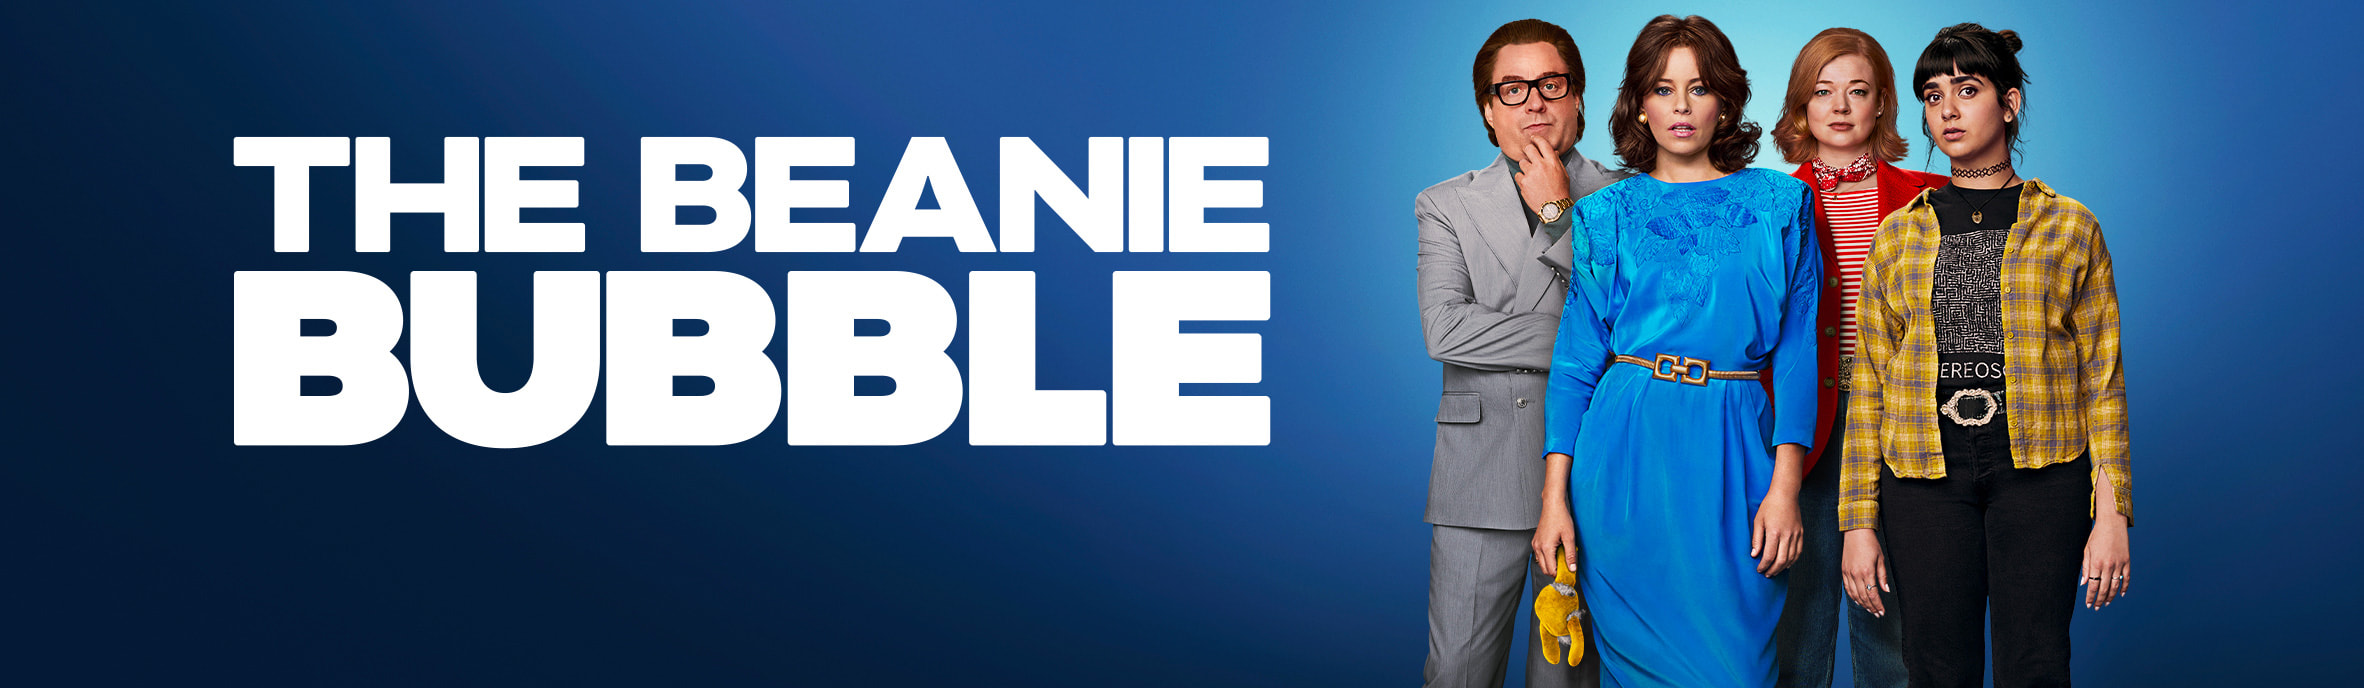 The Beanie Bubble - Apple TV+ Press